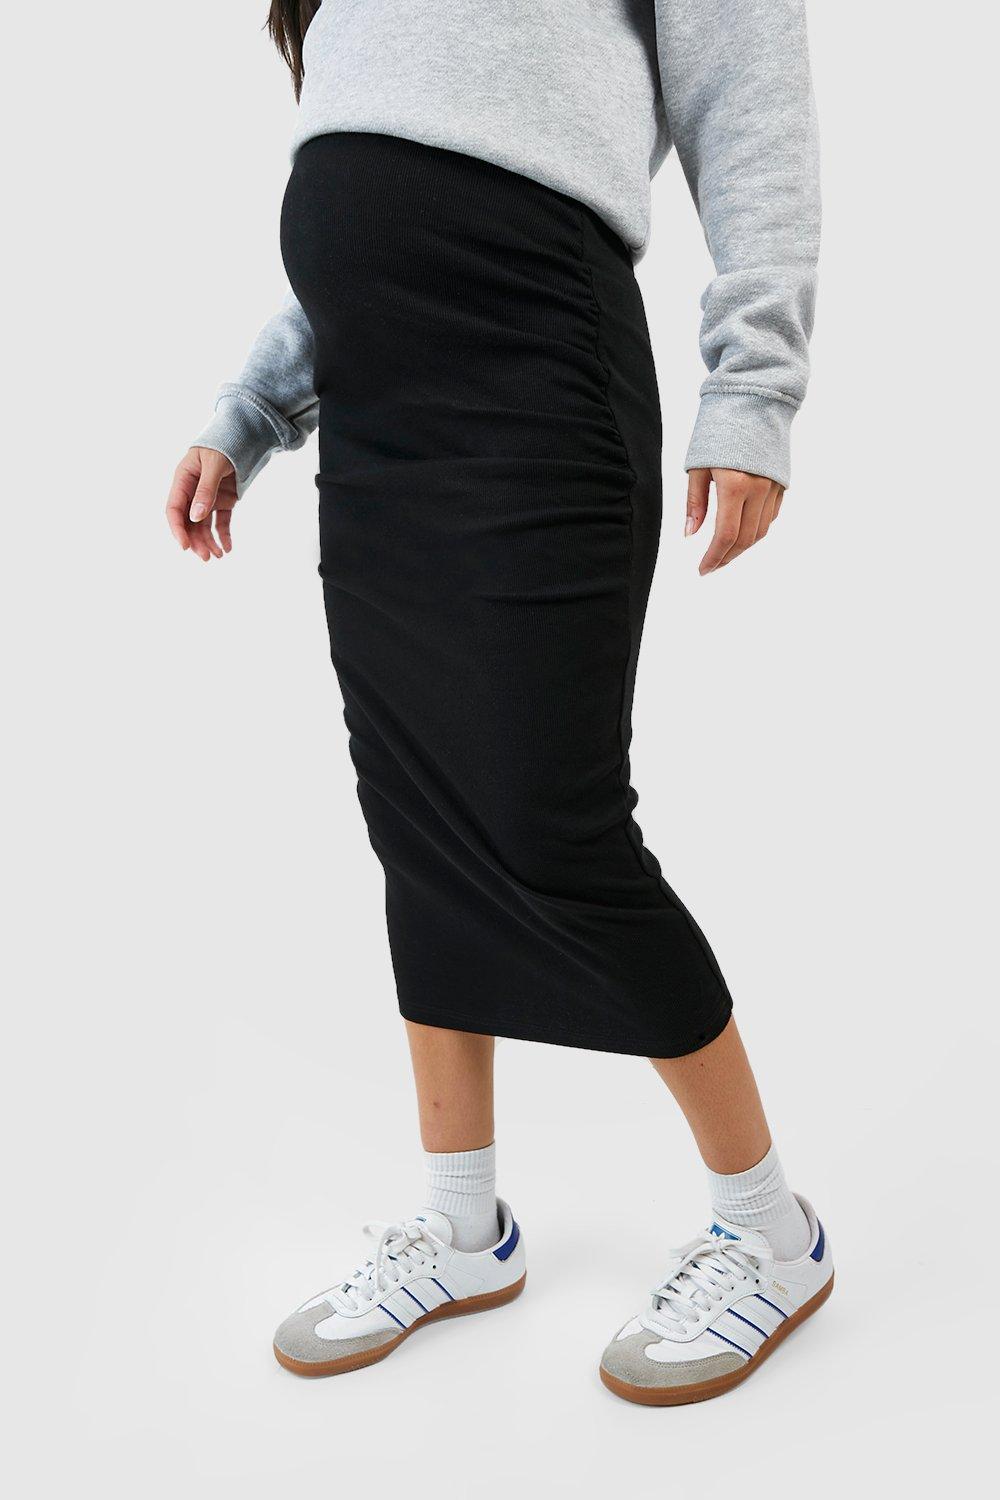 BH Maternity Cotton Rib Skirt-2366 Black